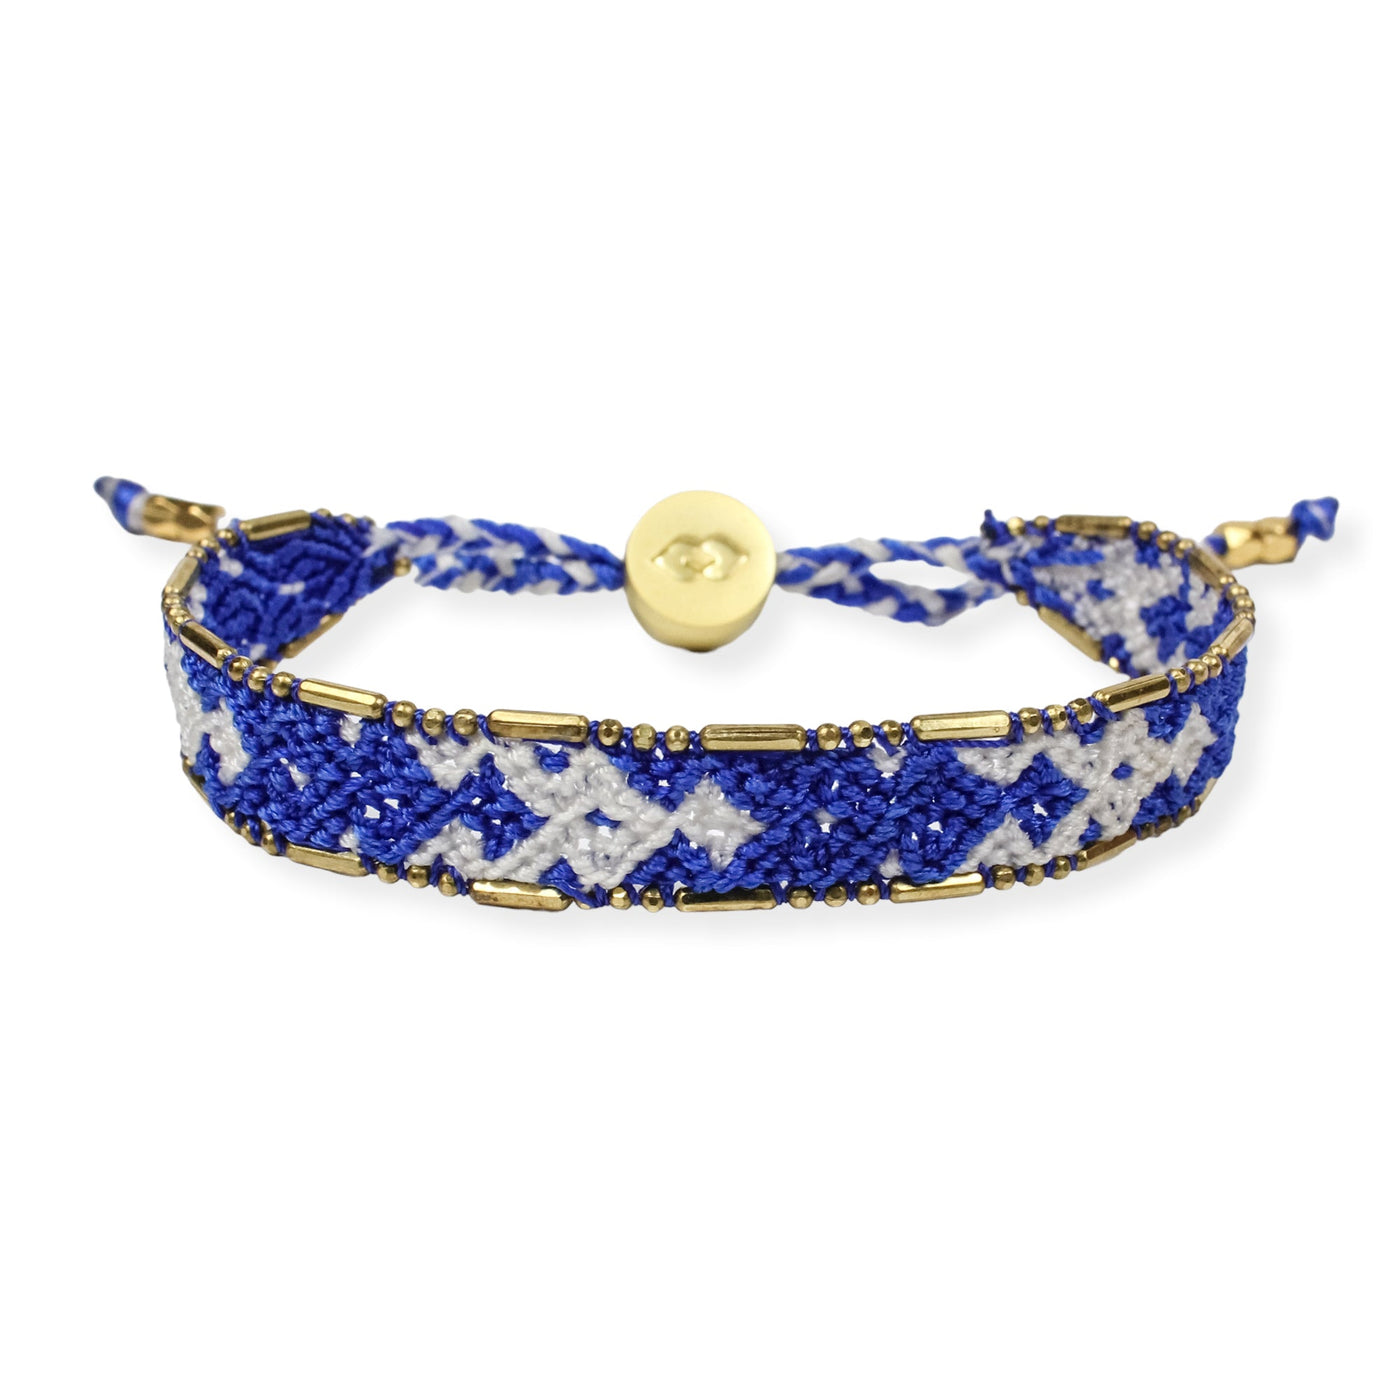 Bali Friendship Bracelet - Royal Blue and White